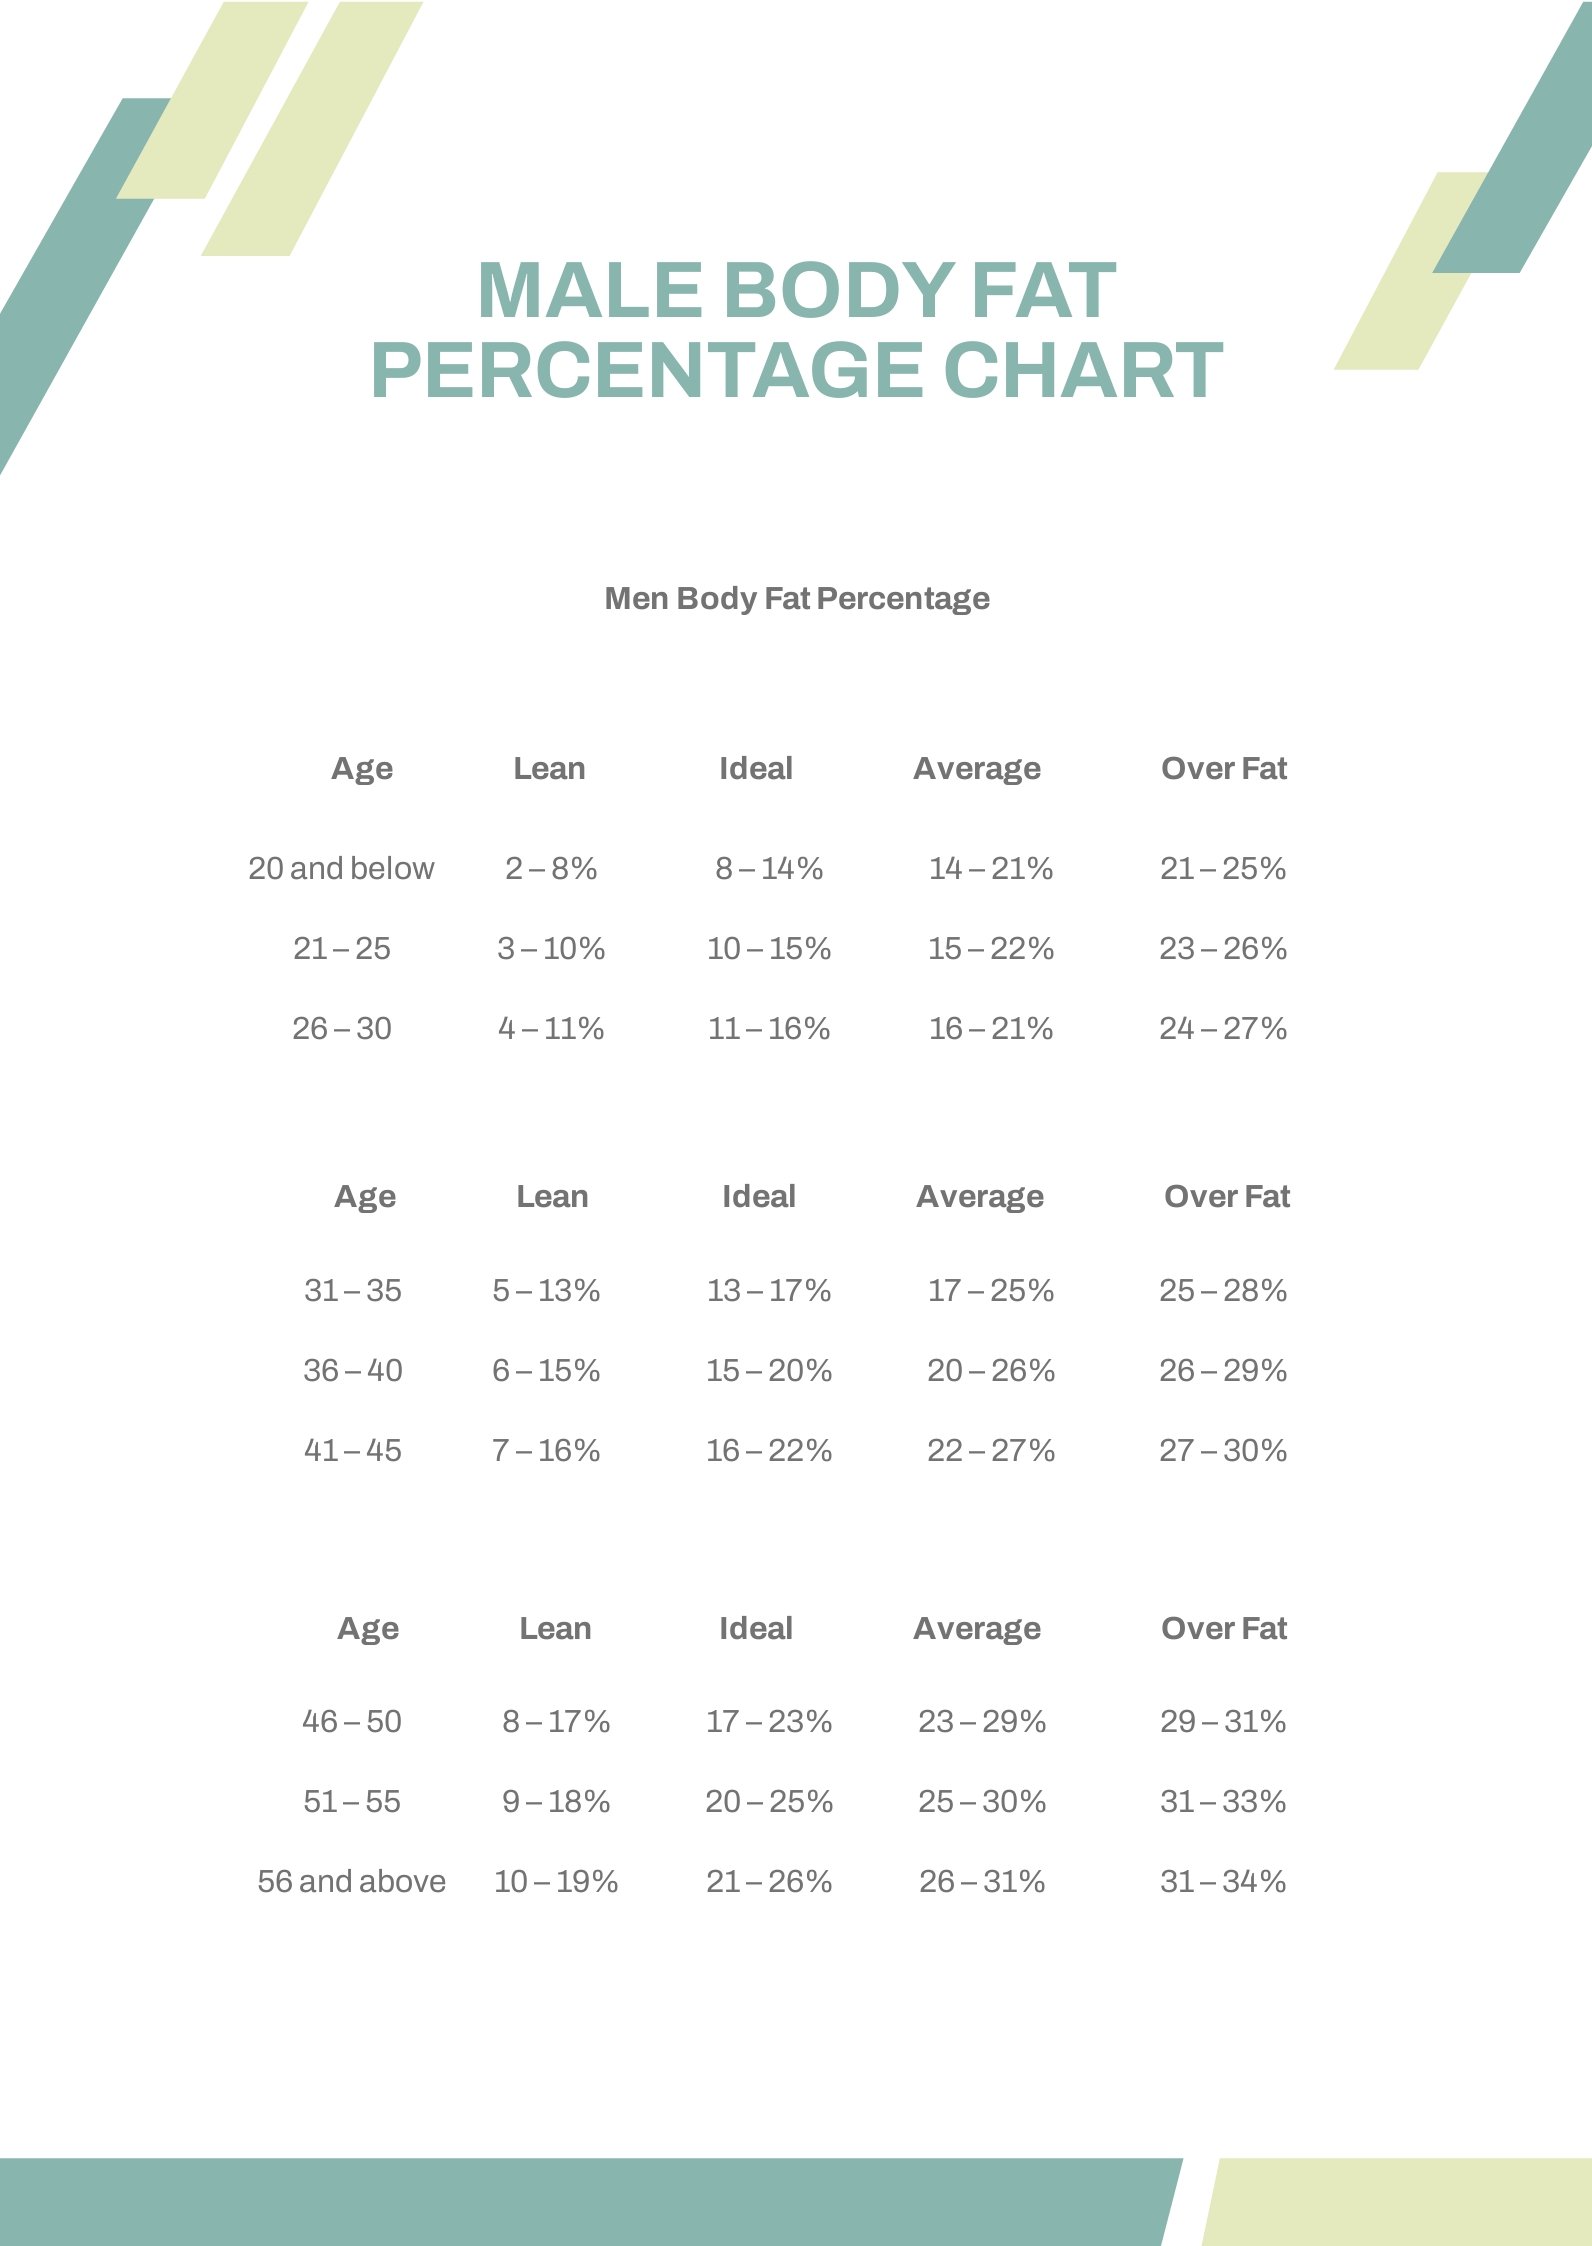 Male Body Fat Percentage Chart in PDF